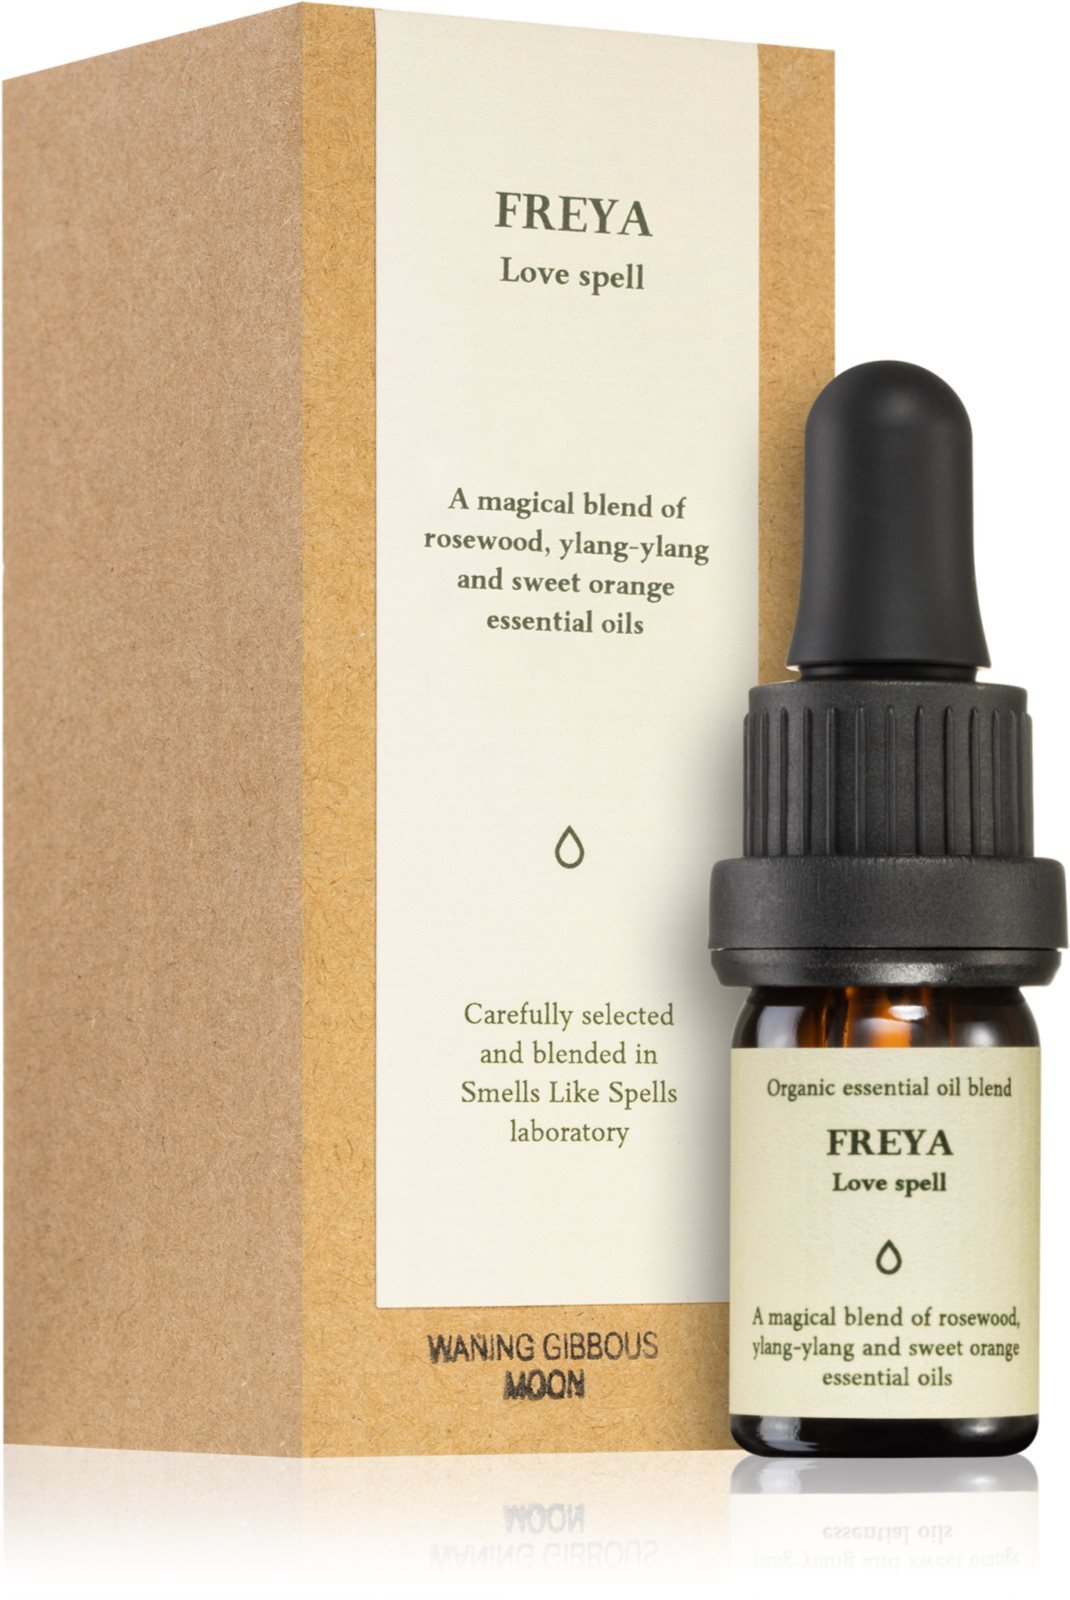 Smells Like Spells ароматическое масло (Love spell) Essential Oil Blend  Freya купить в Москве